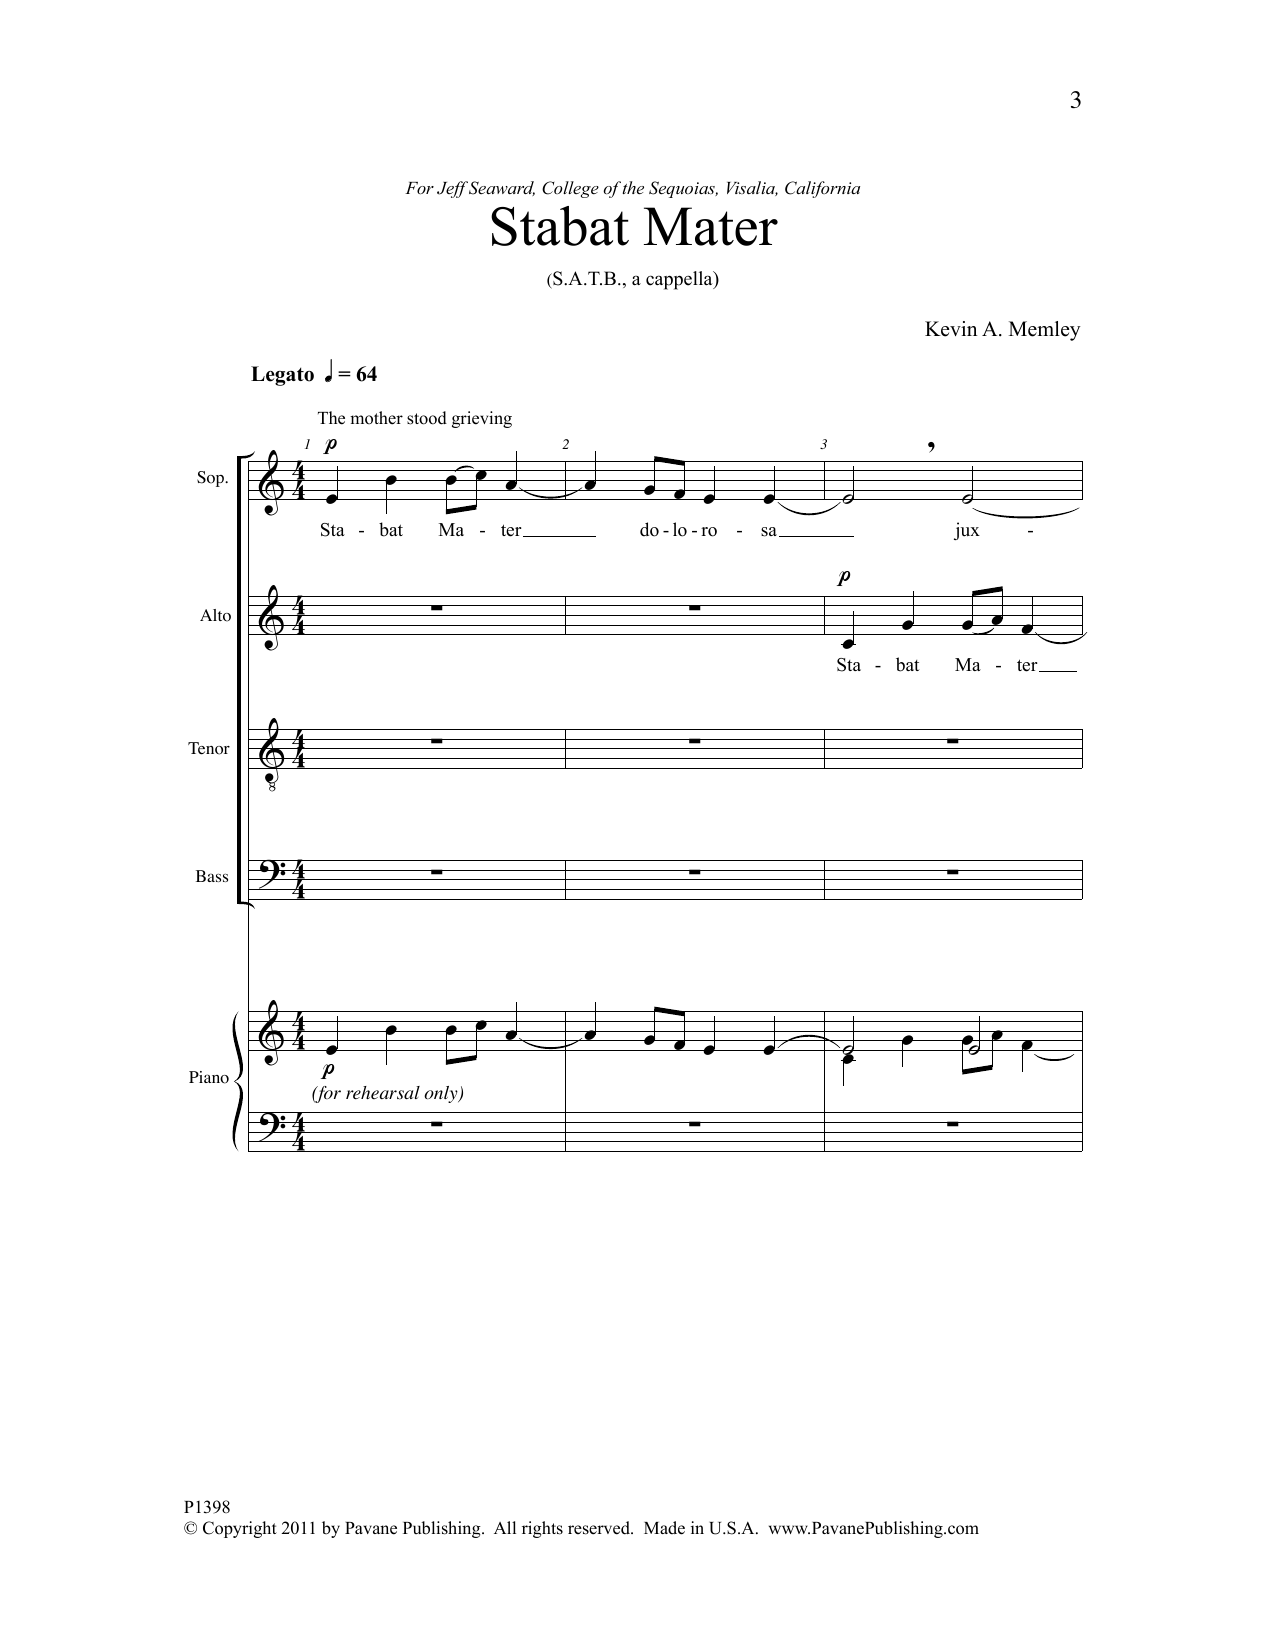 Download Kevin A. Memley Stabat Mater Sheet Music